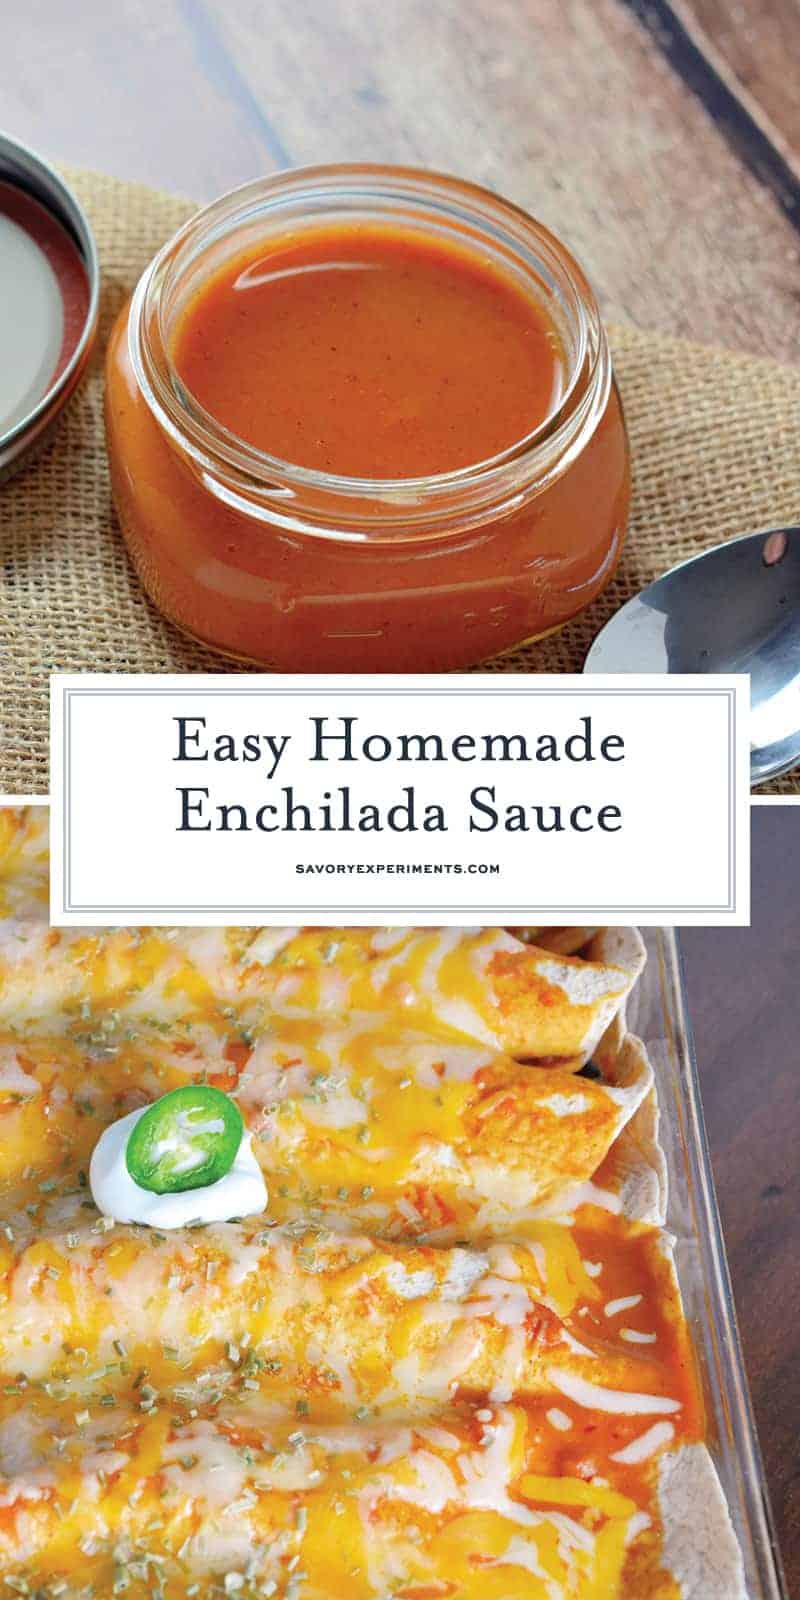 Homemade Enchilada Sauce + VIDEO - Spicy Enchilada Sauce